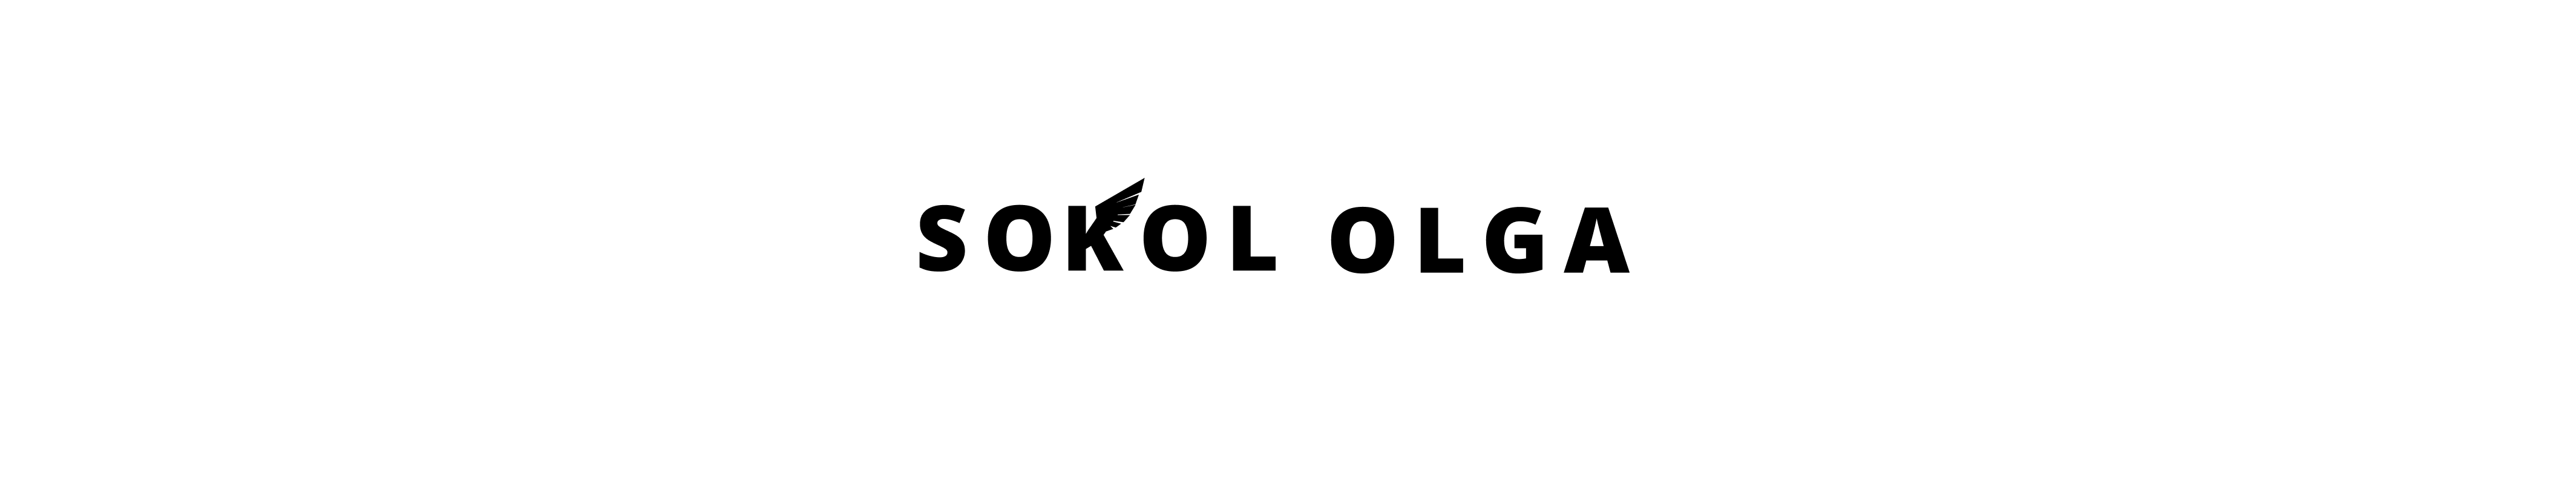 Banner de perfil de Olga Sokol